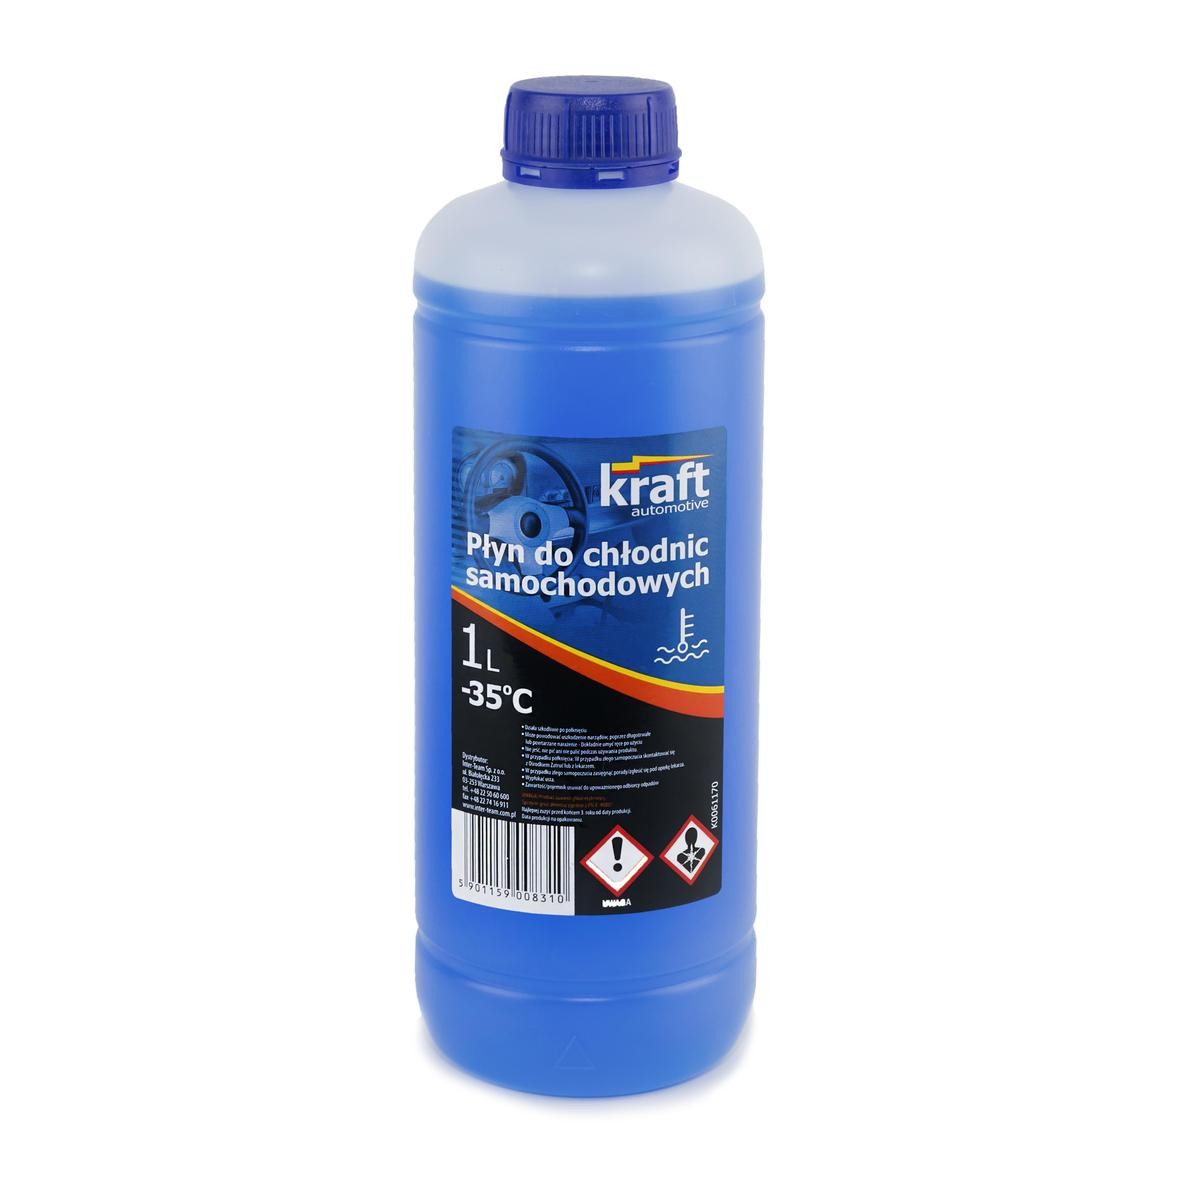 MOTO-MORINI CORSARO Kühlmittel G11, ASTM D3306-03 Blau, 1l KRAFT G11 K0061170